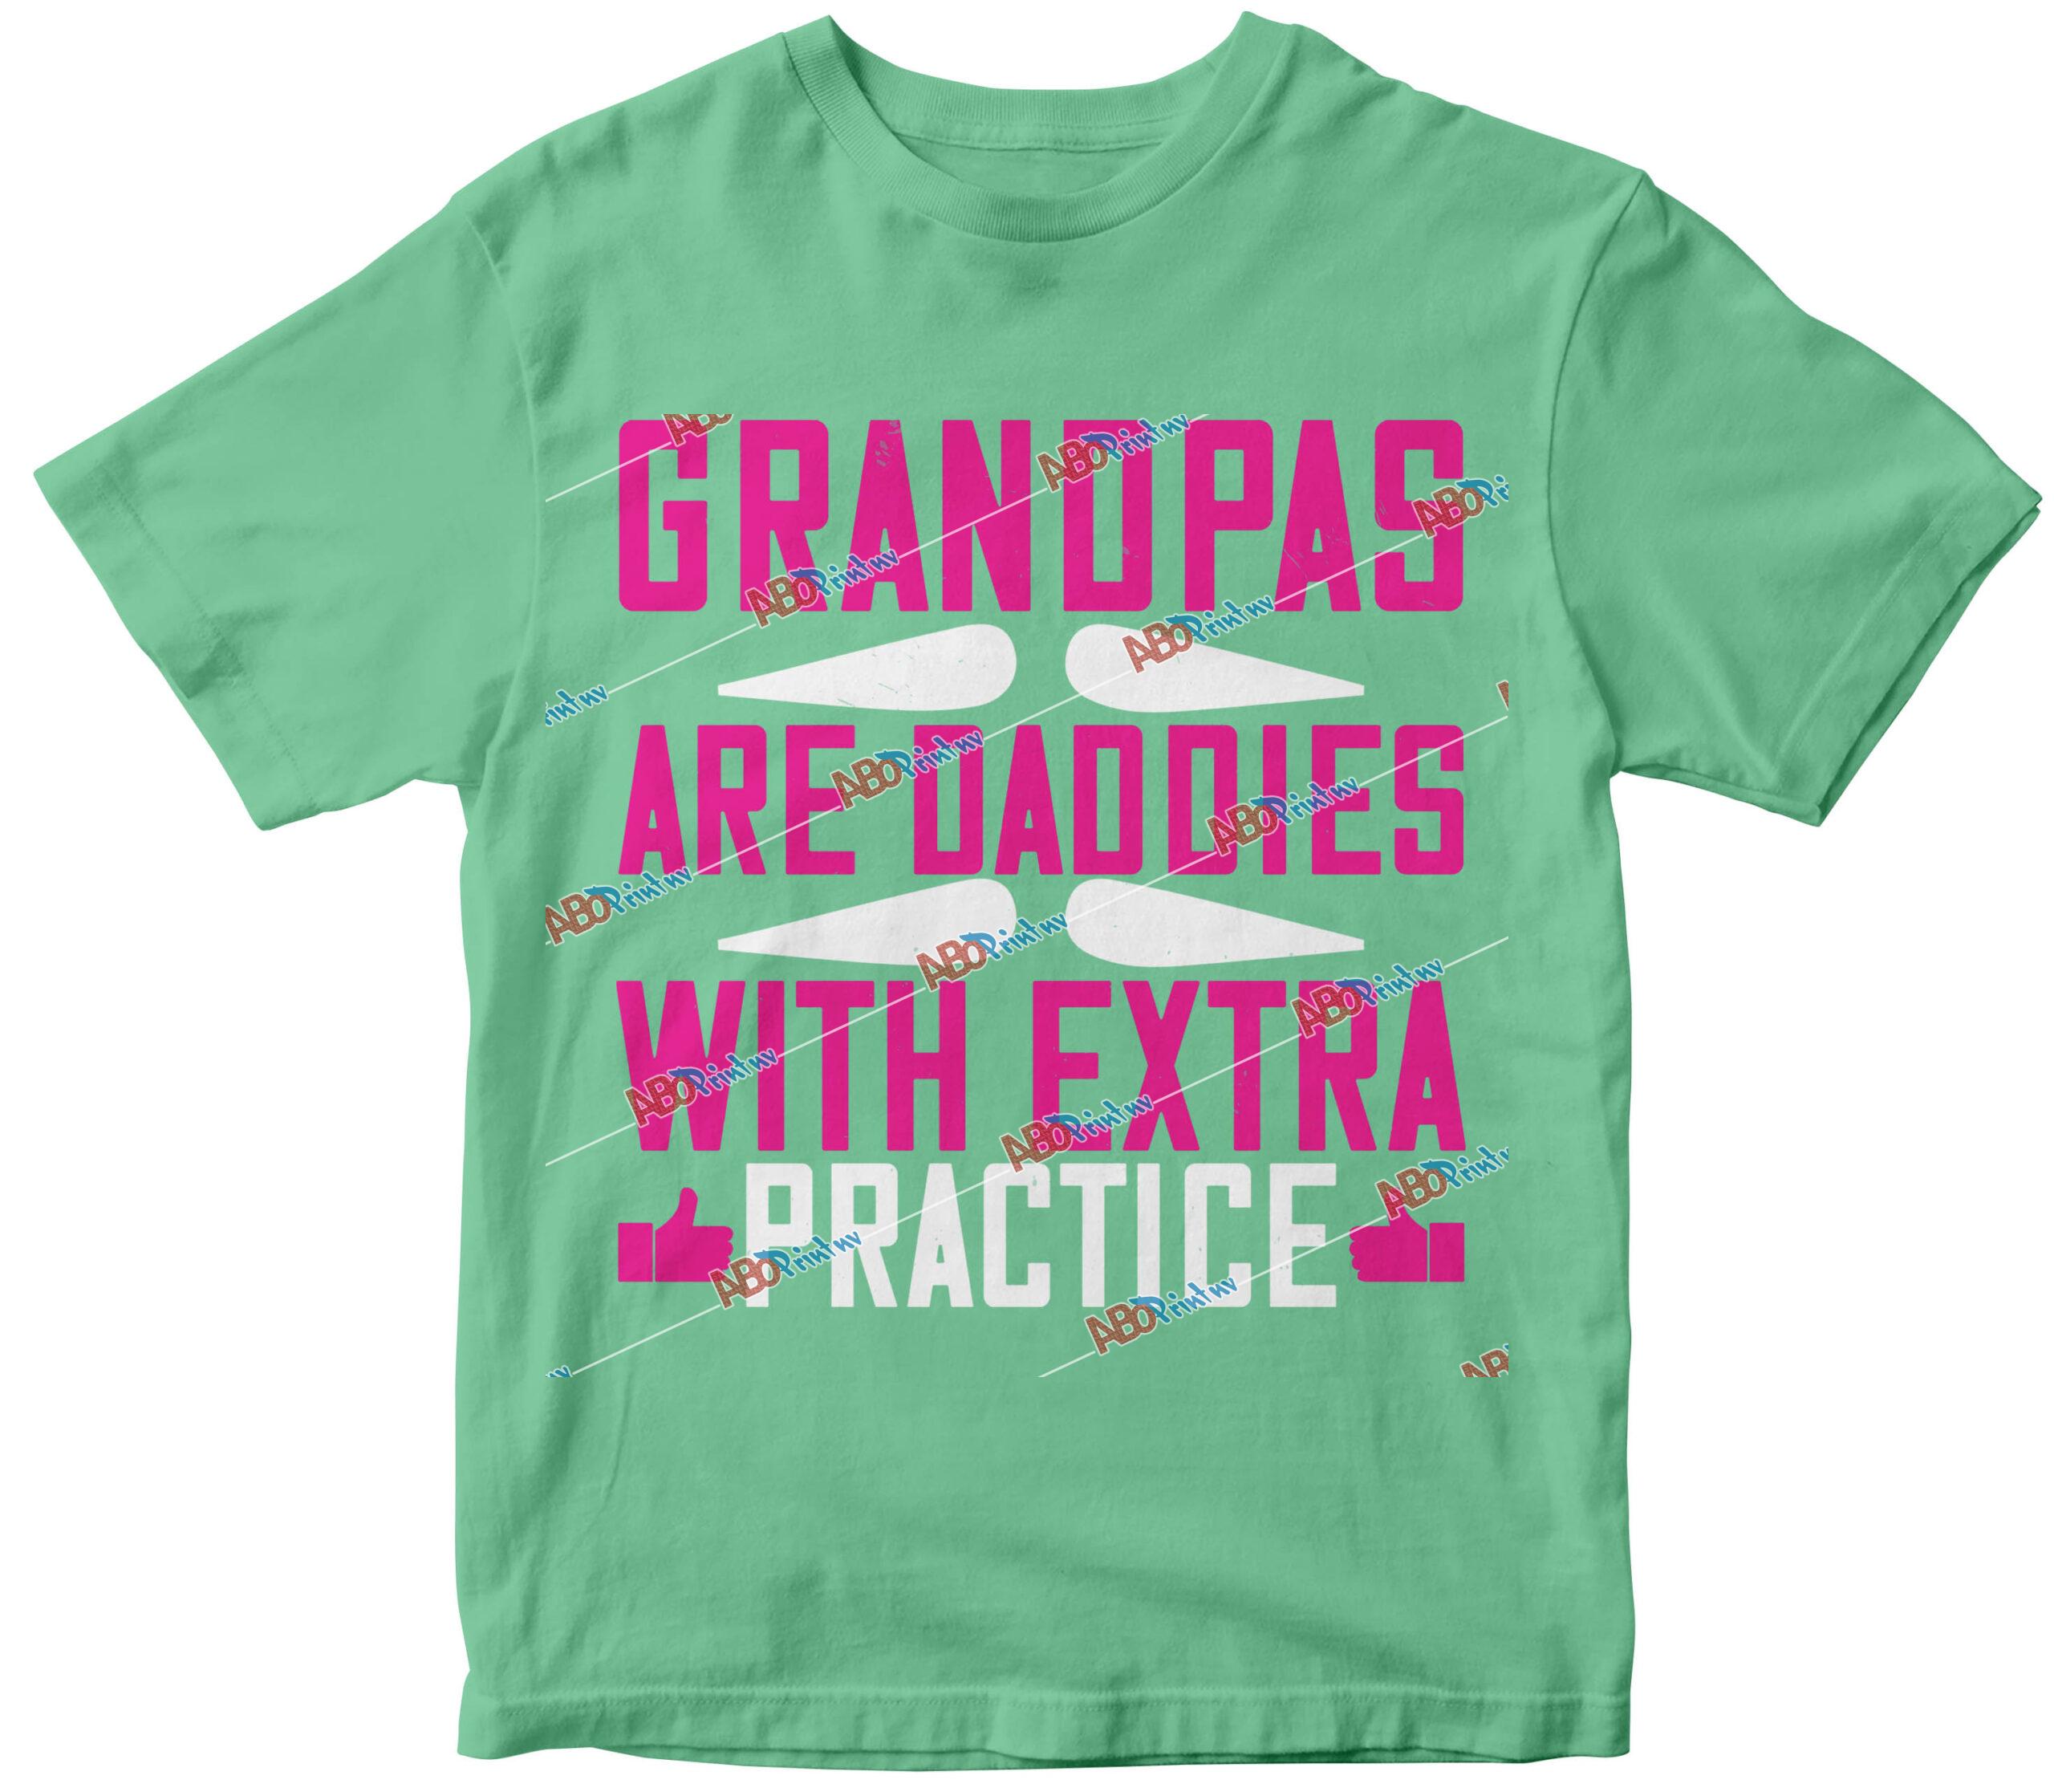 Grandpas are daddies with extra practice02.jpg